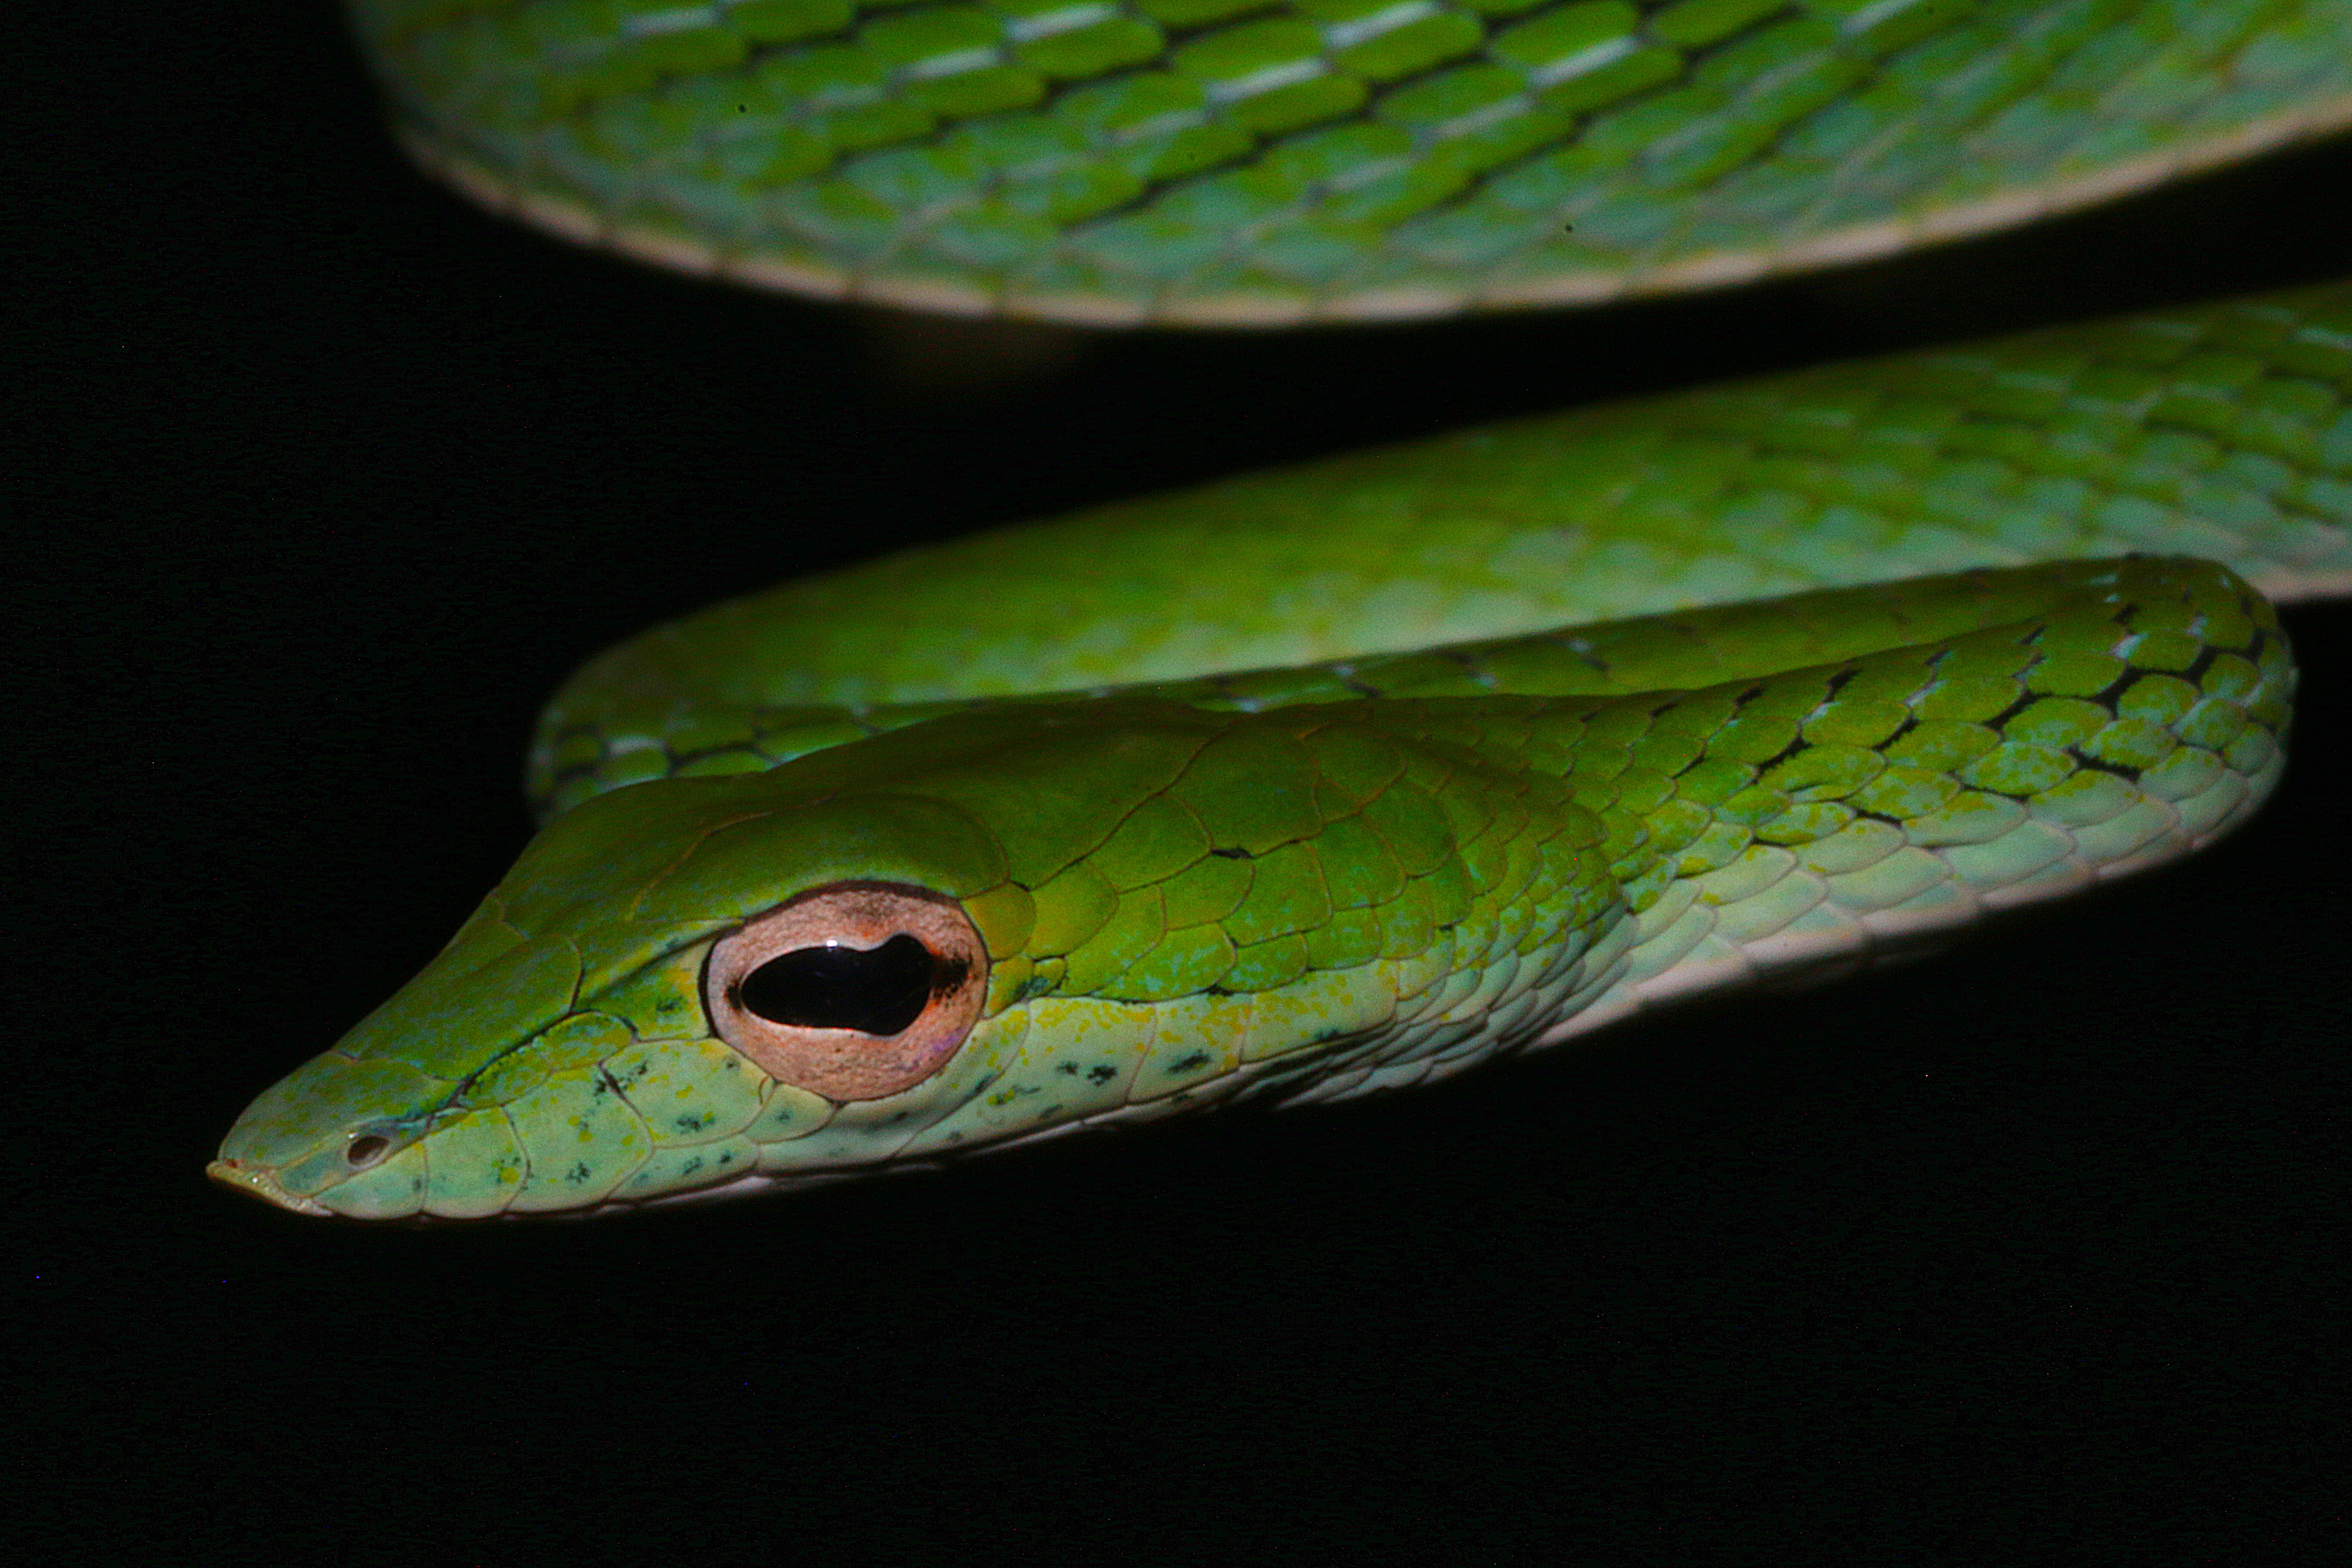 "Close up of an Asian vine snake"